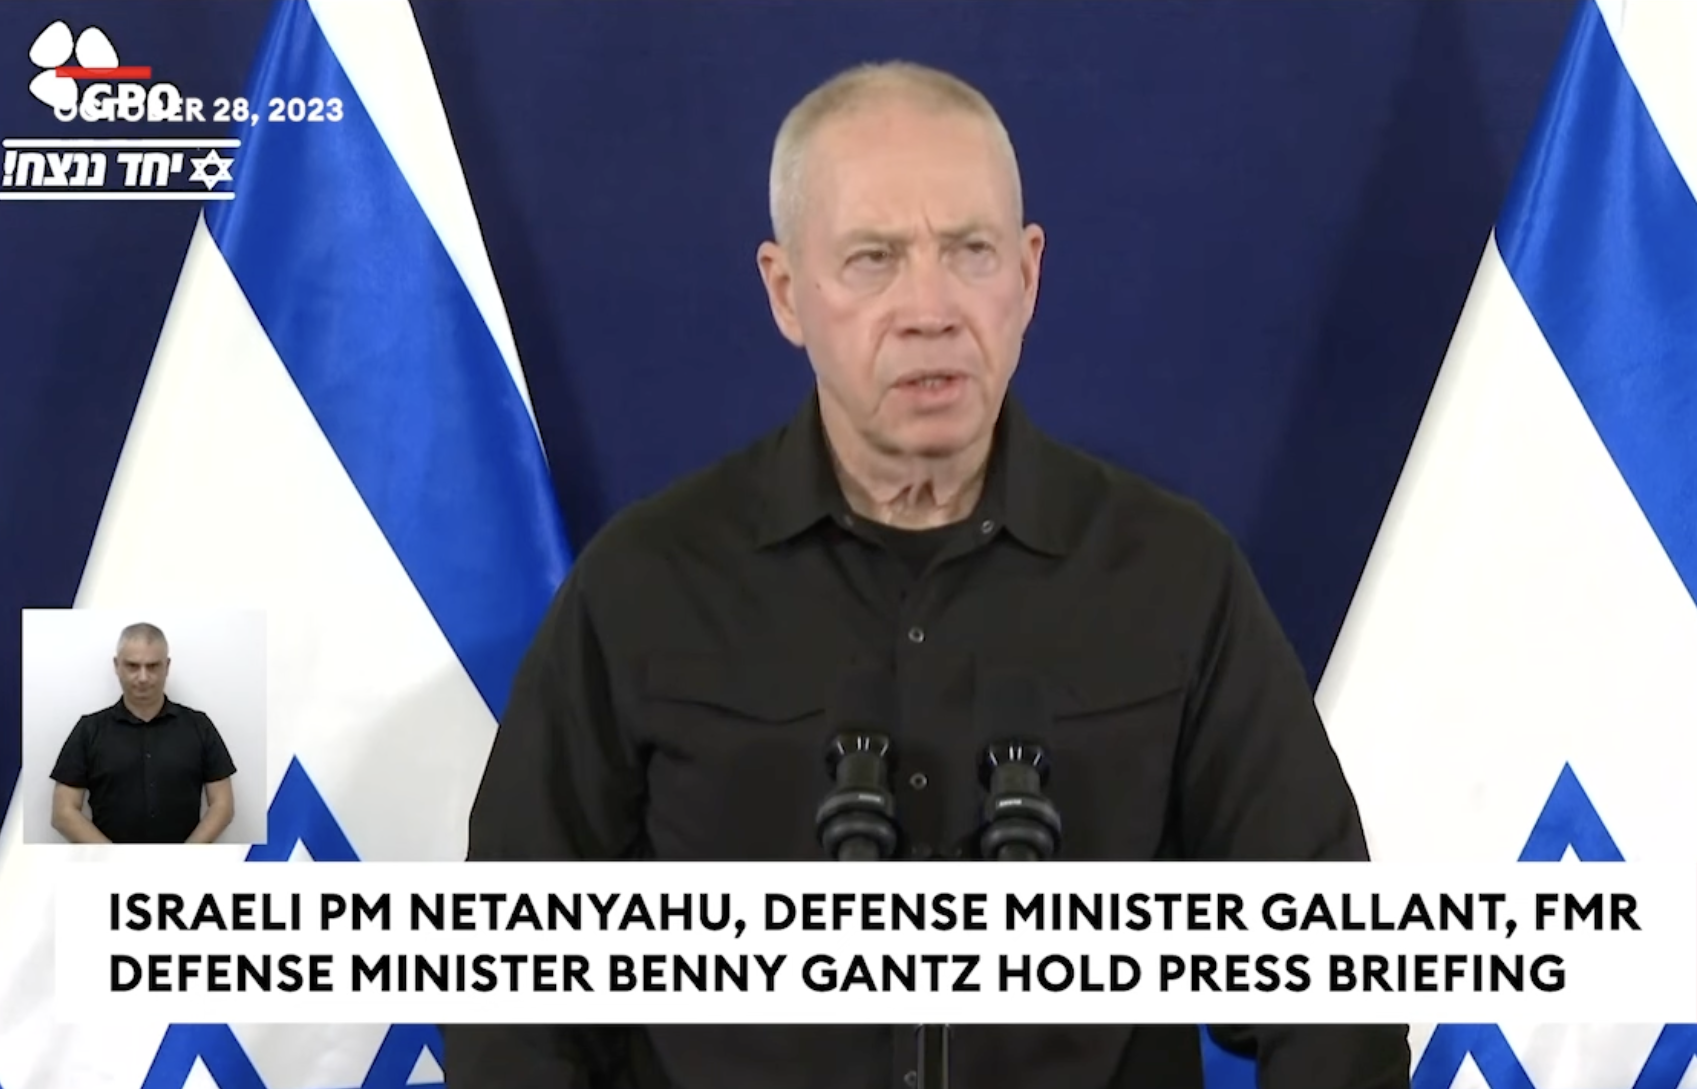 "War for Humanity," says Netanyahu, Gallant and Gantz - Hamas’ Sinwar Responds